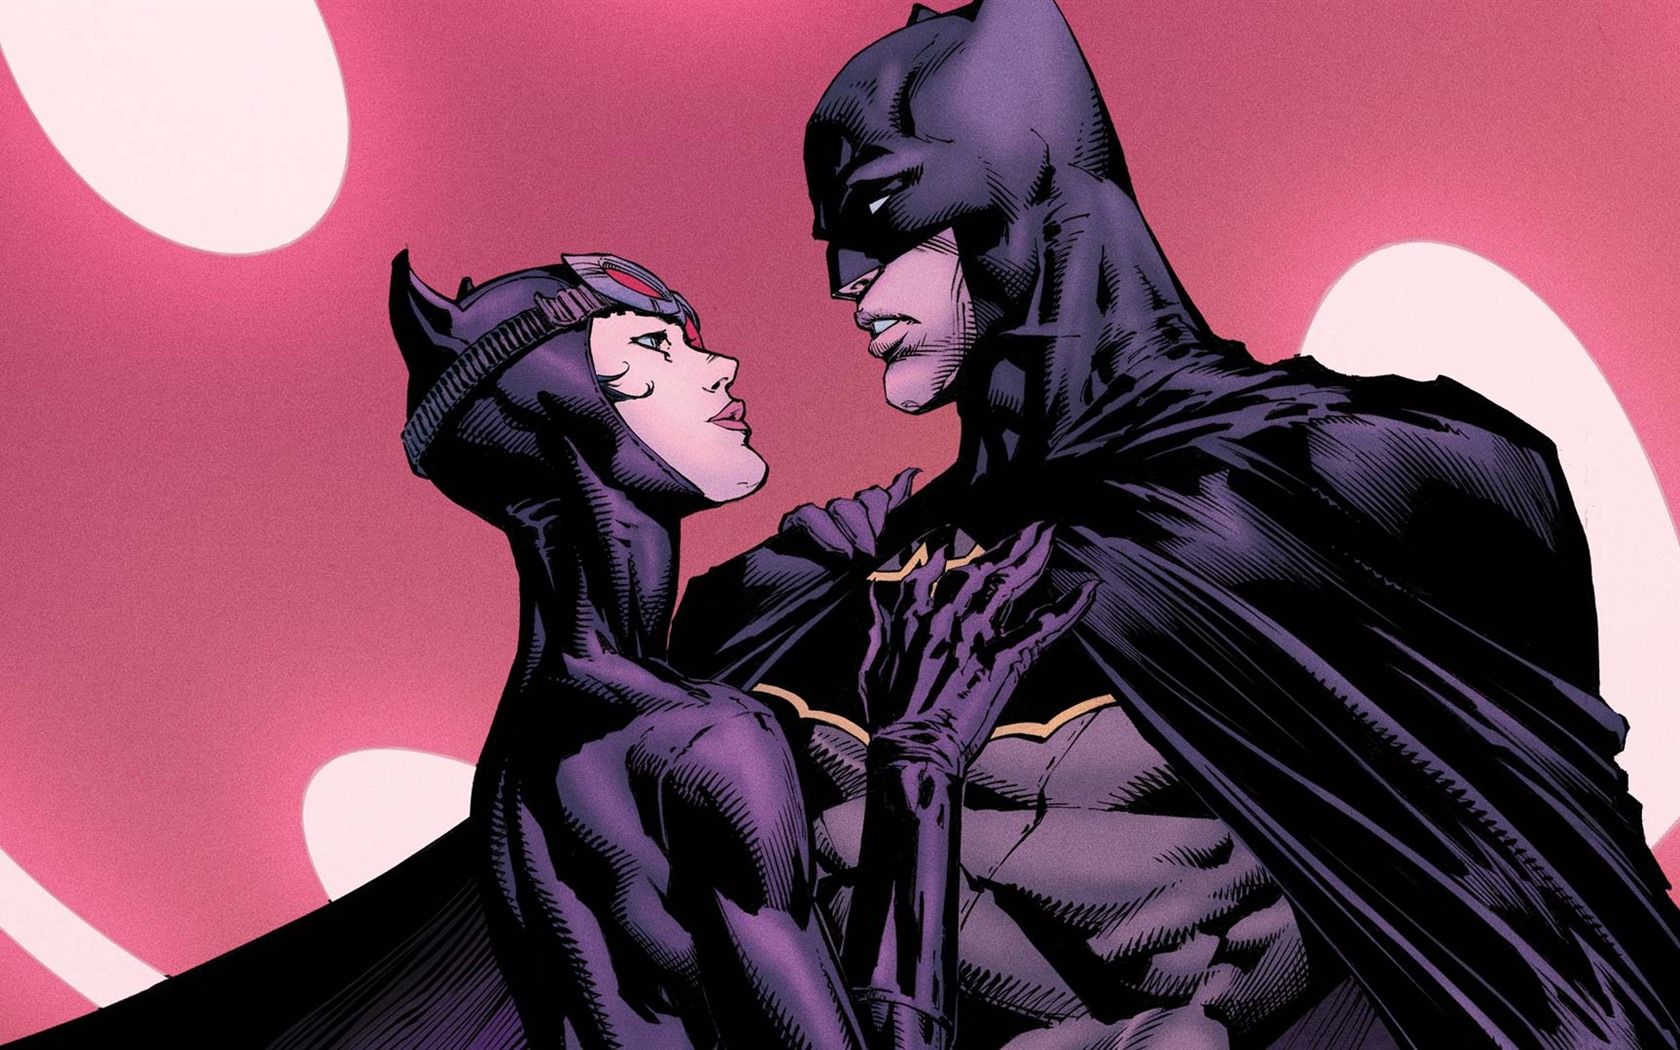 Wallpaper Batman and Catwoman, DC comics heroes 1920x1080 Full HD 2K Picture, Image